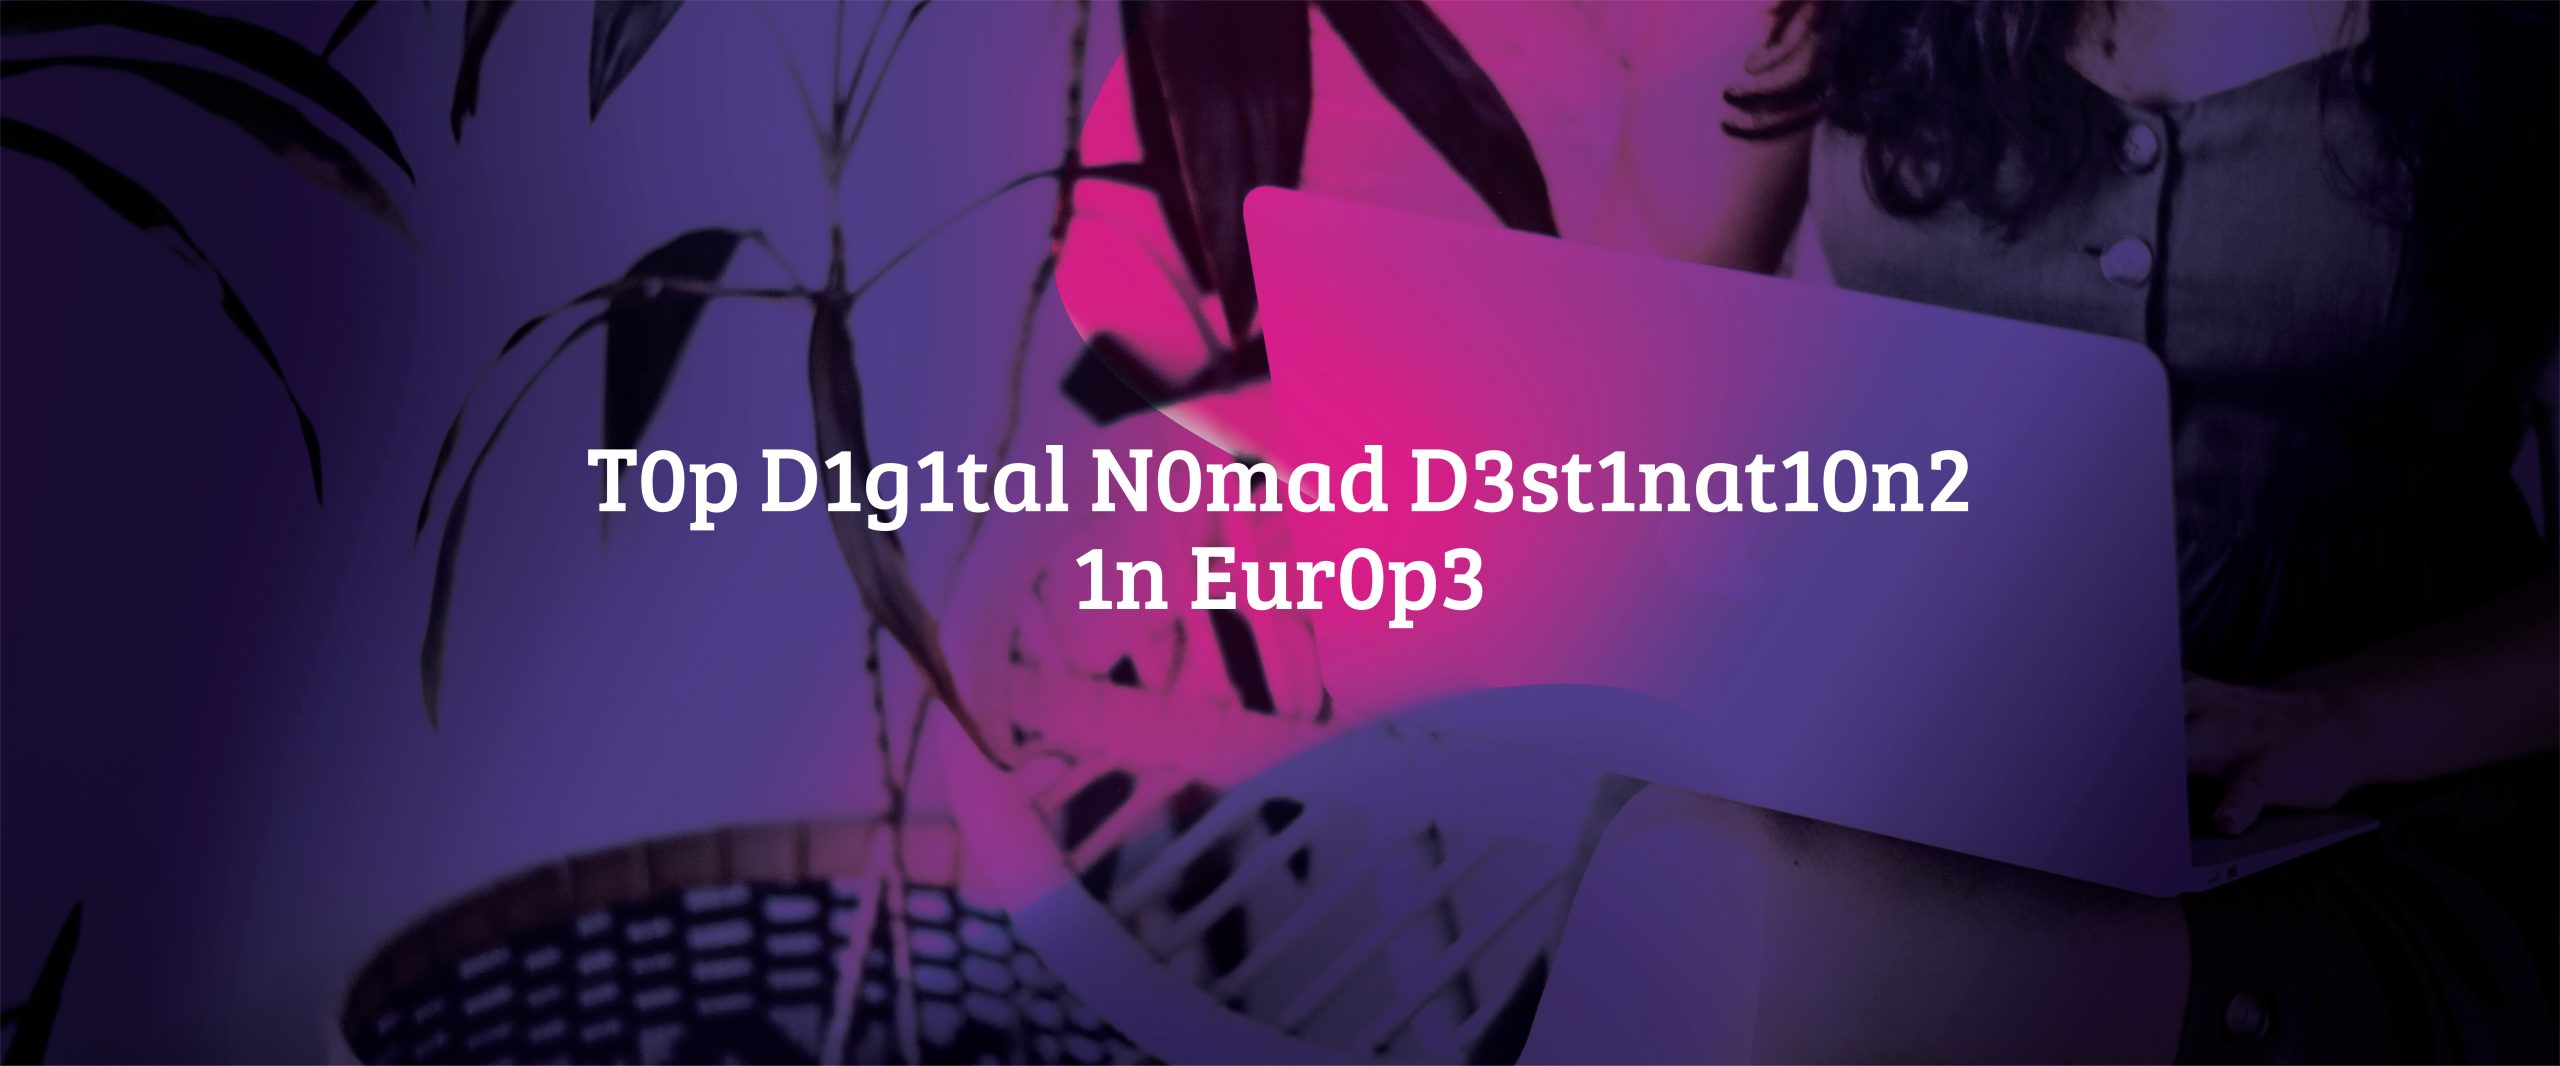 Top 5 Digital Nomad Destinations Europe